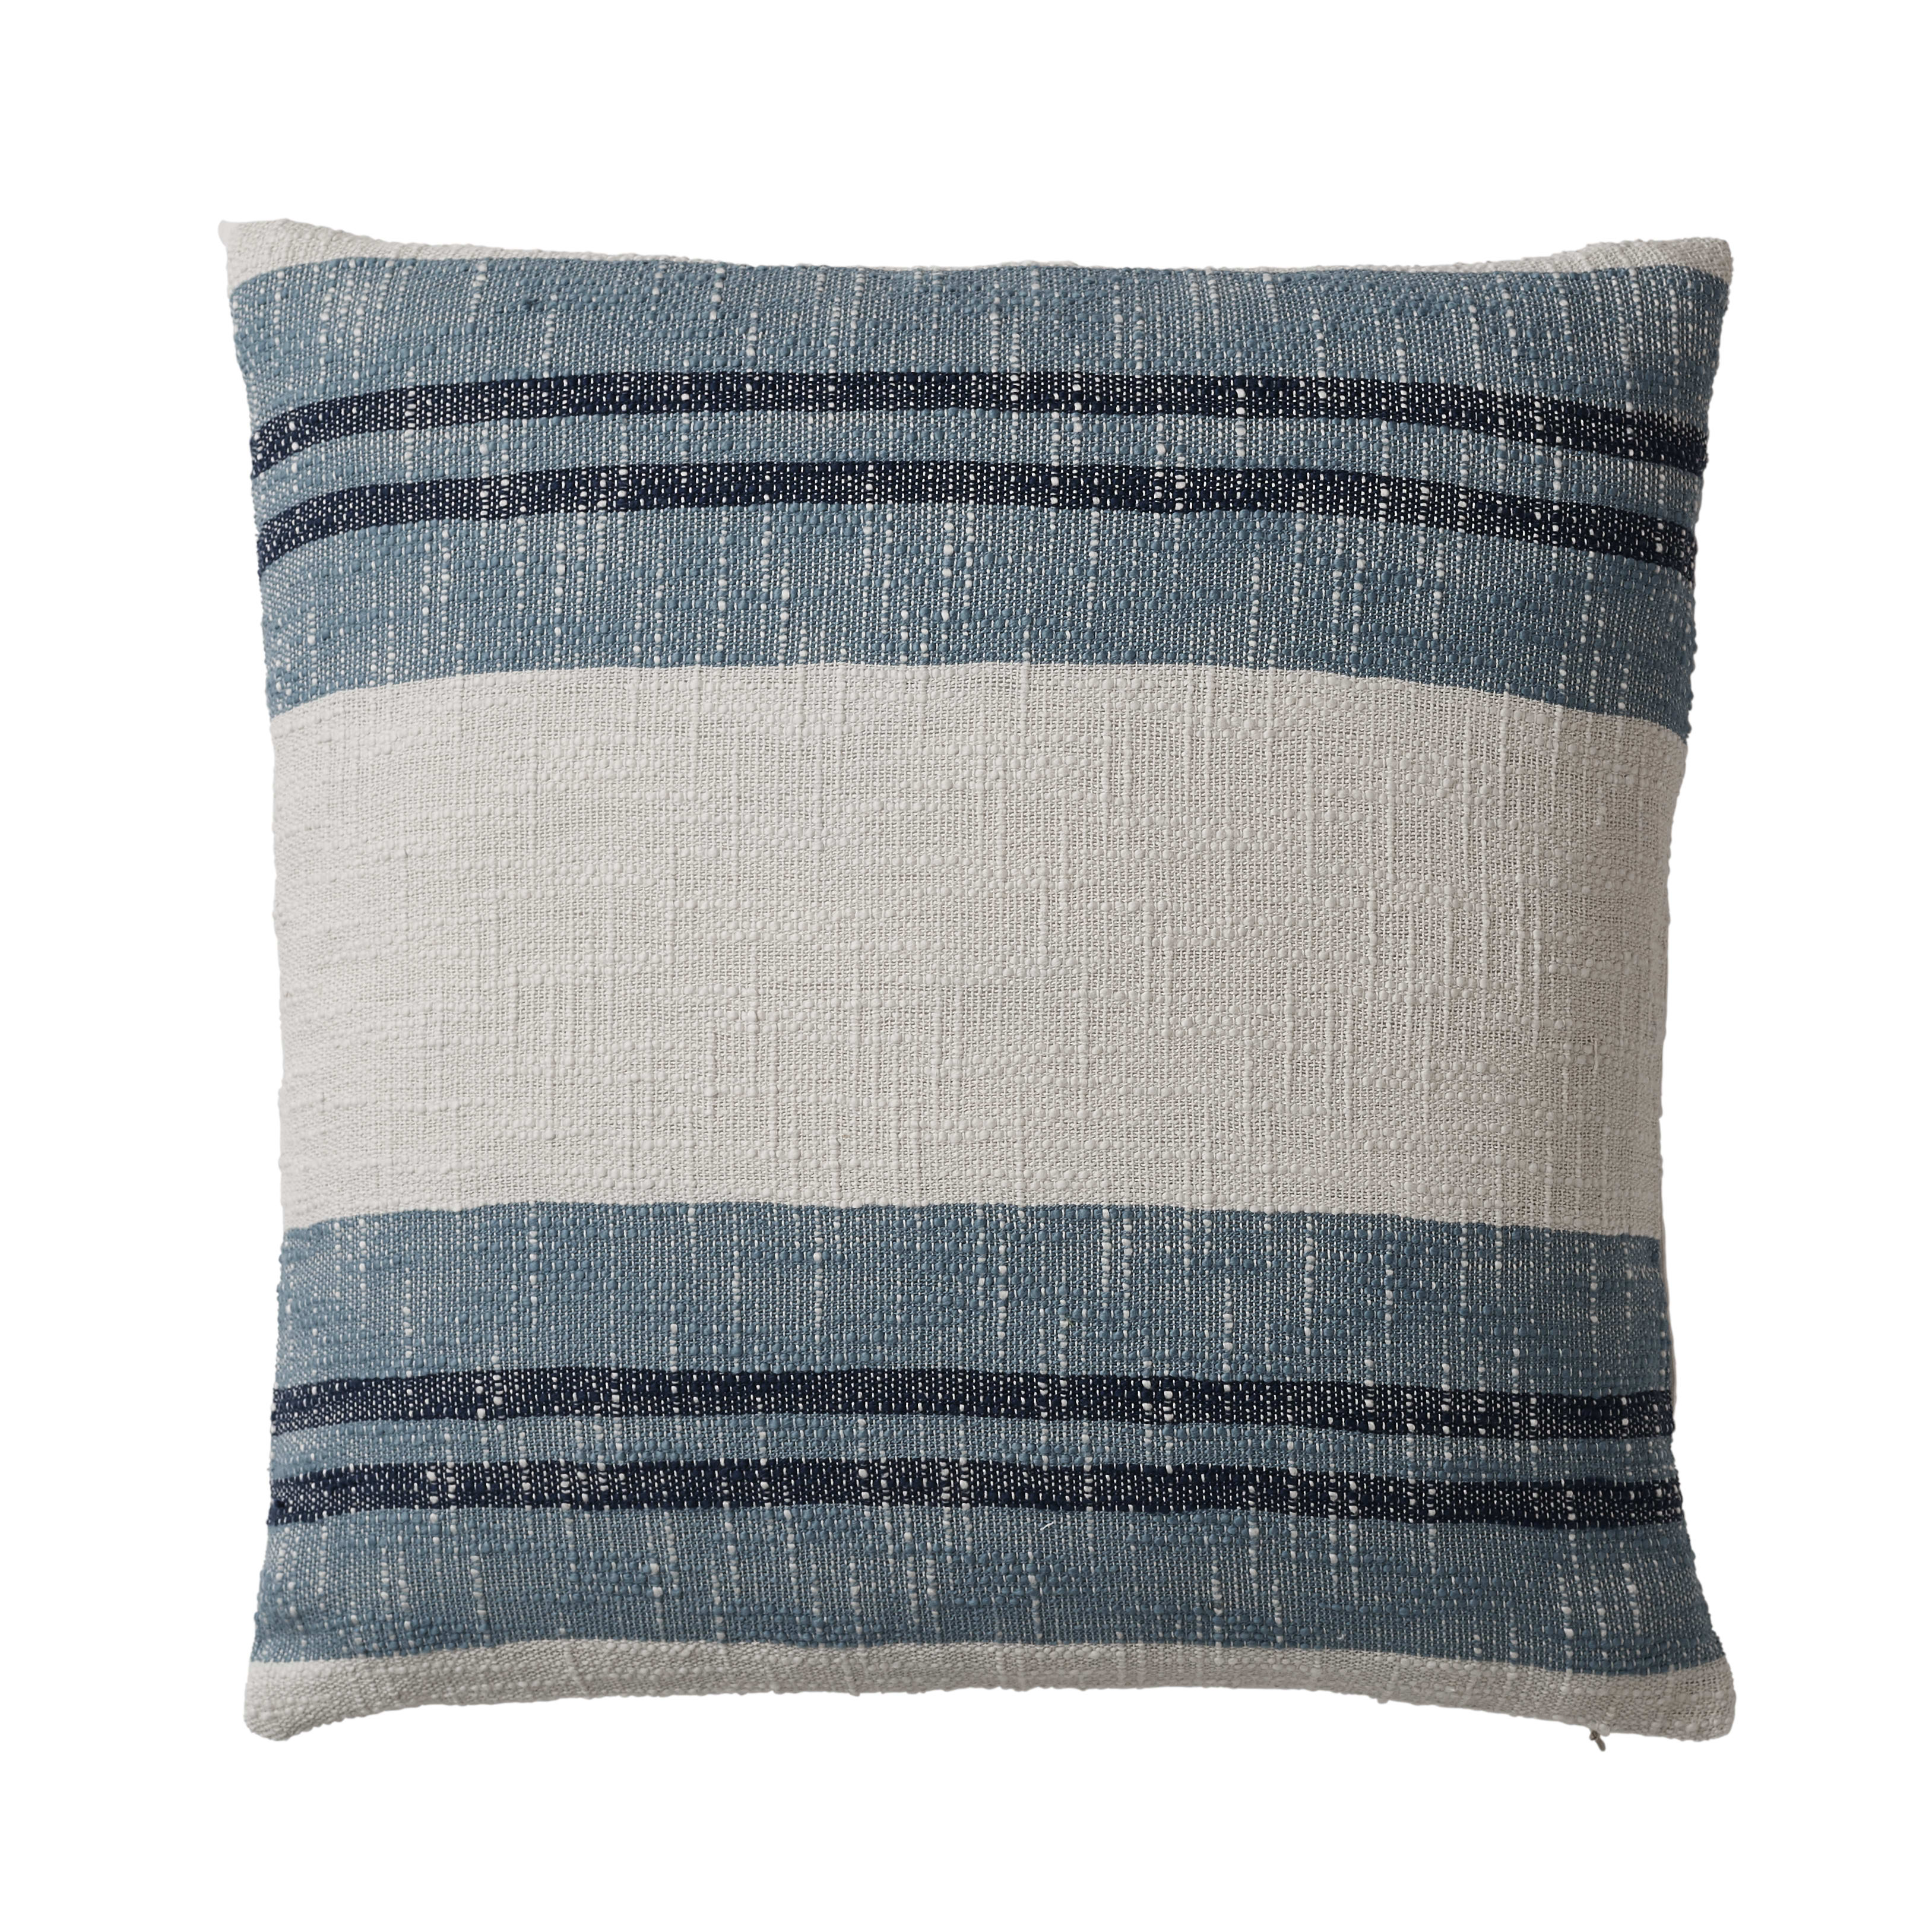 Cstudio Home Stripe Pillow Cover - Blue Multi